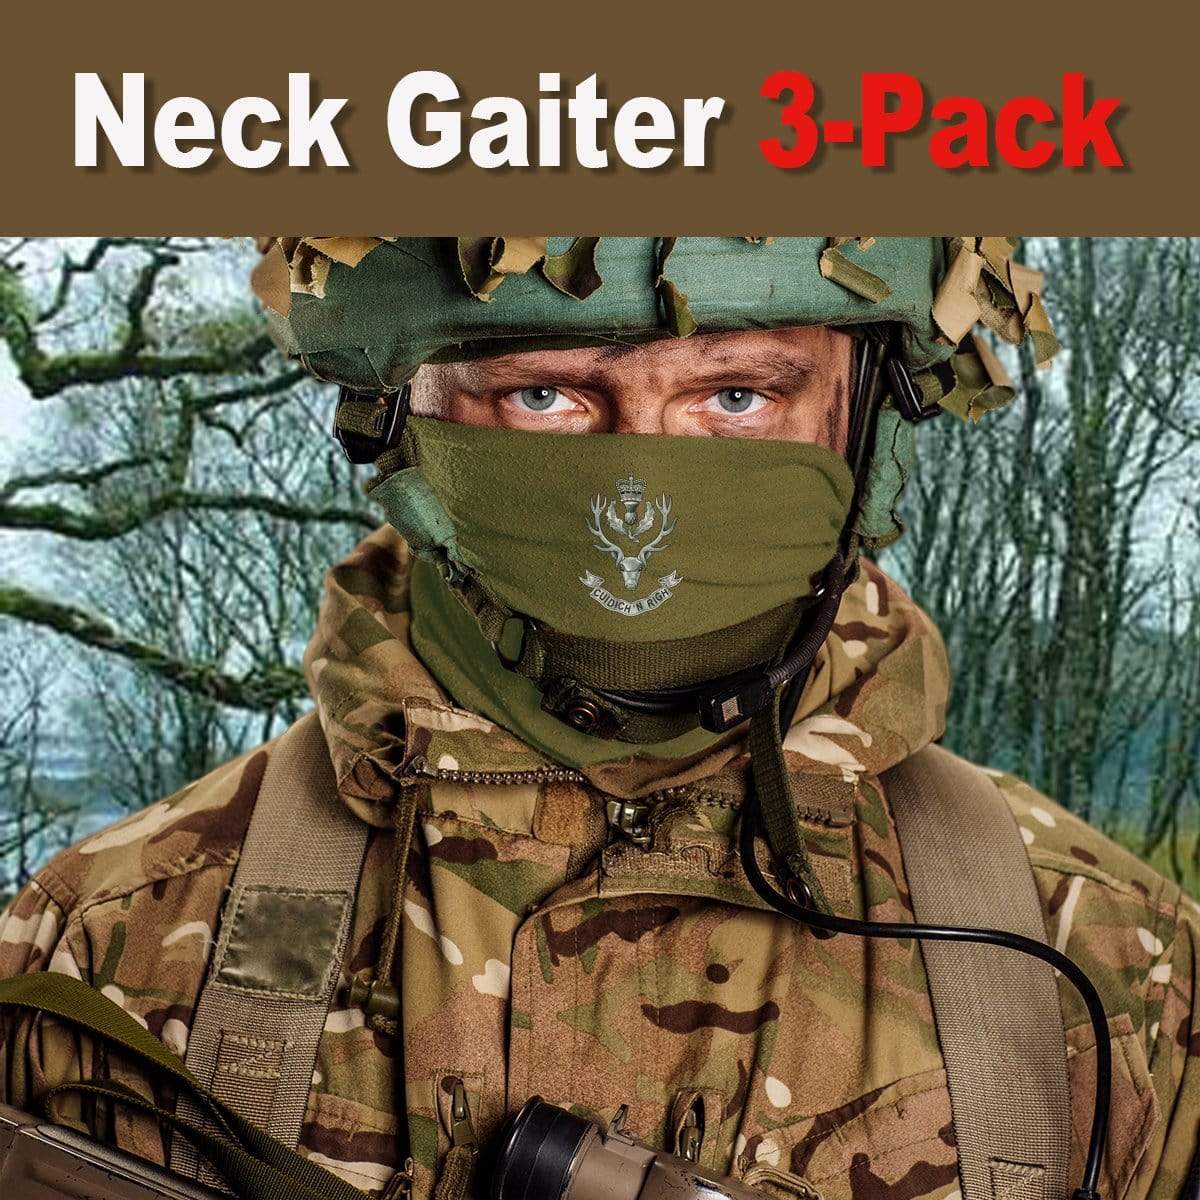 neck gaiter Bandana 3-Pack - Queen's Own Highlanders Neck Gaiter 3-Pack Queen's Own Highlanders Neck Gaiter/Headover 3-Pack